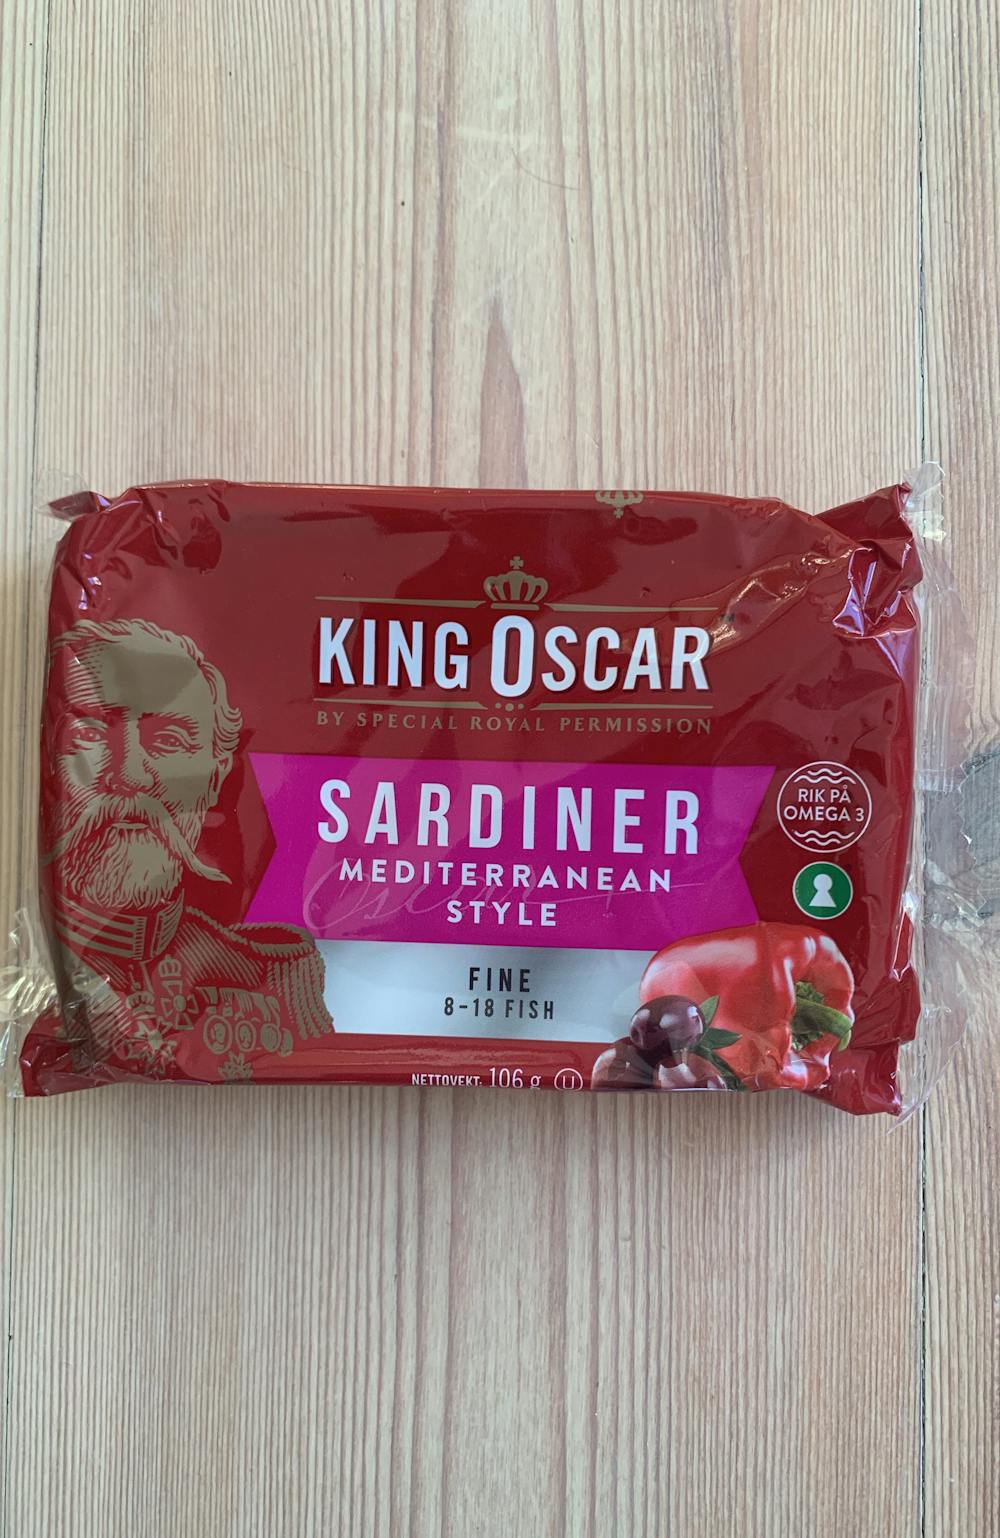 Sardiner, mediterranean style, King Oscar